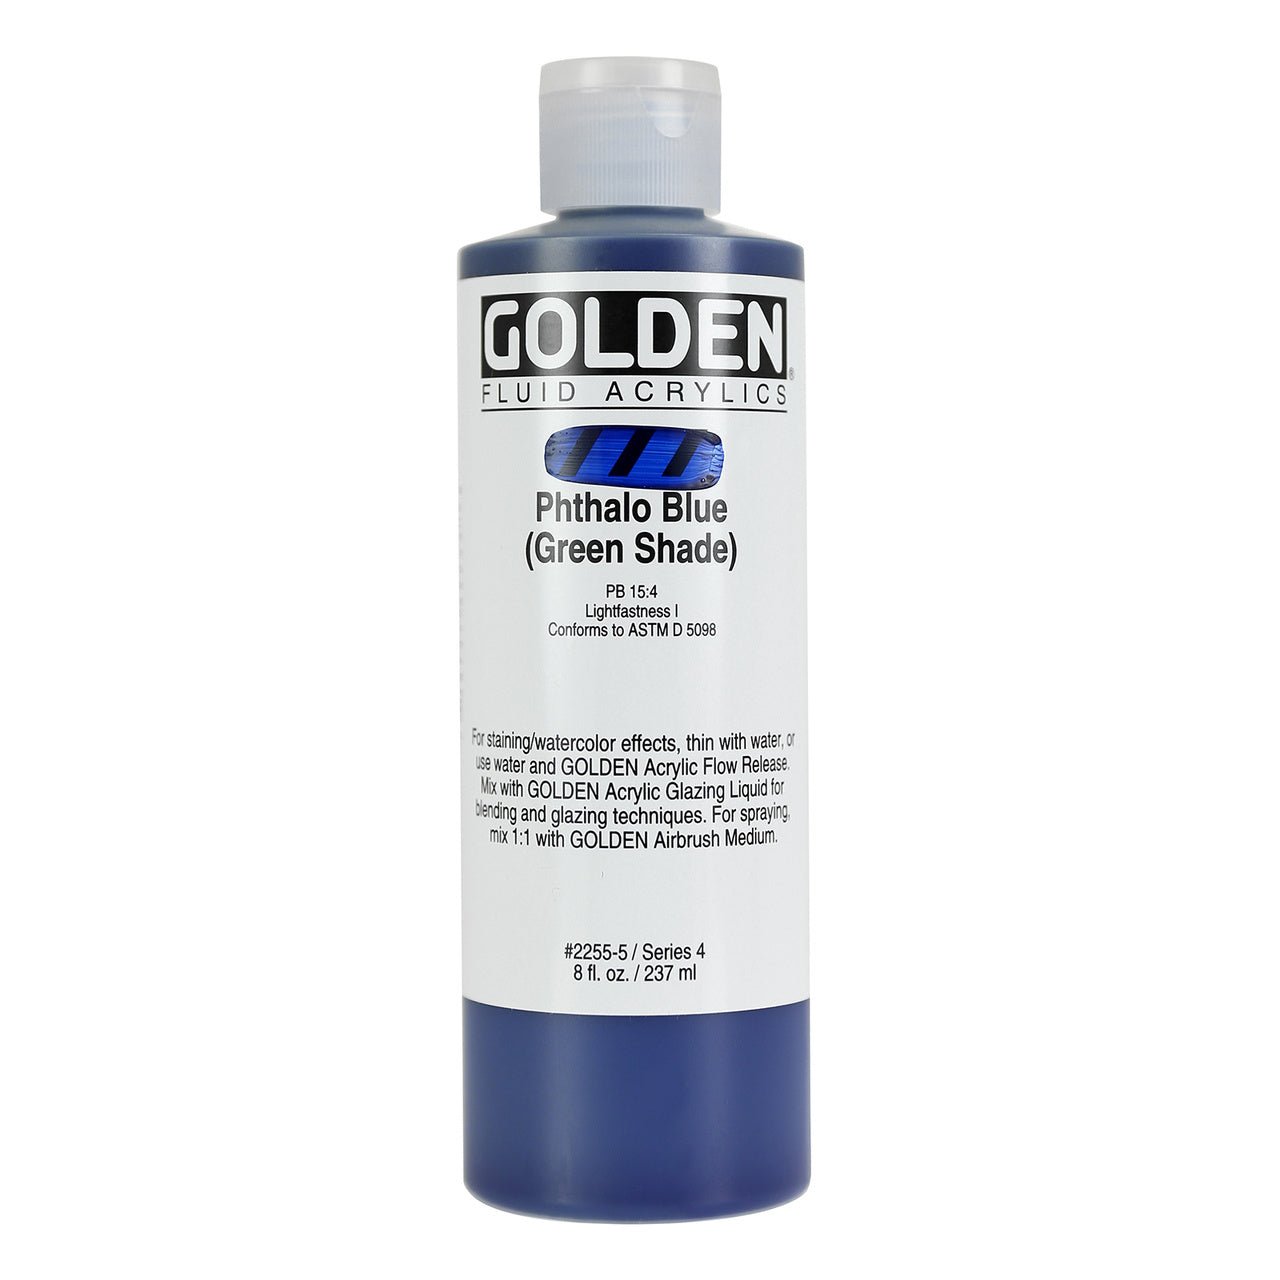 Golden Fluid Acrylic Phthalo Blue (green shade) 8 oz - merriartist.com